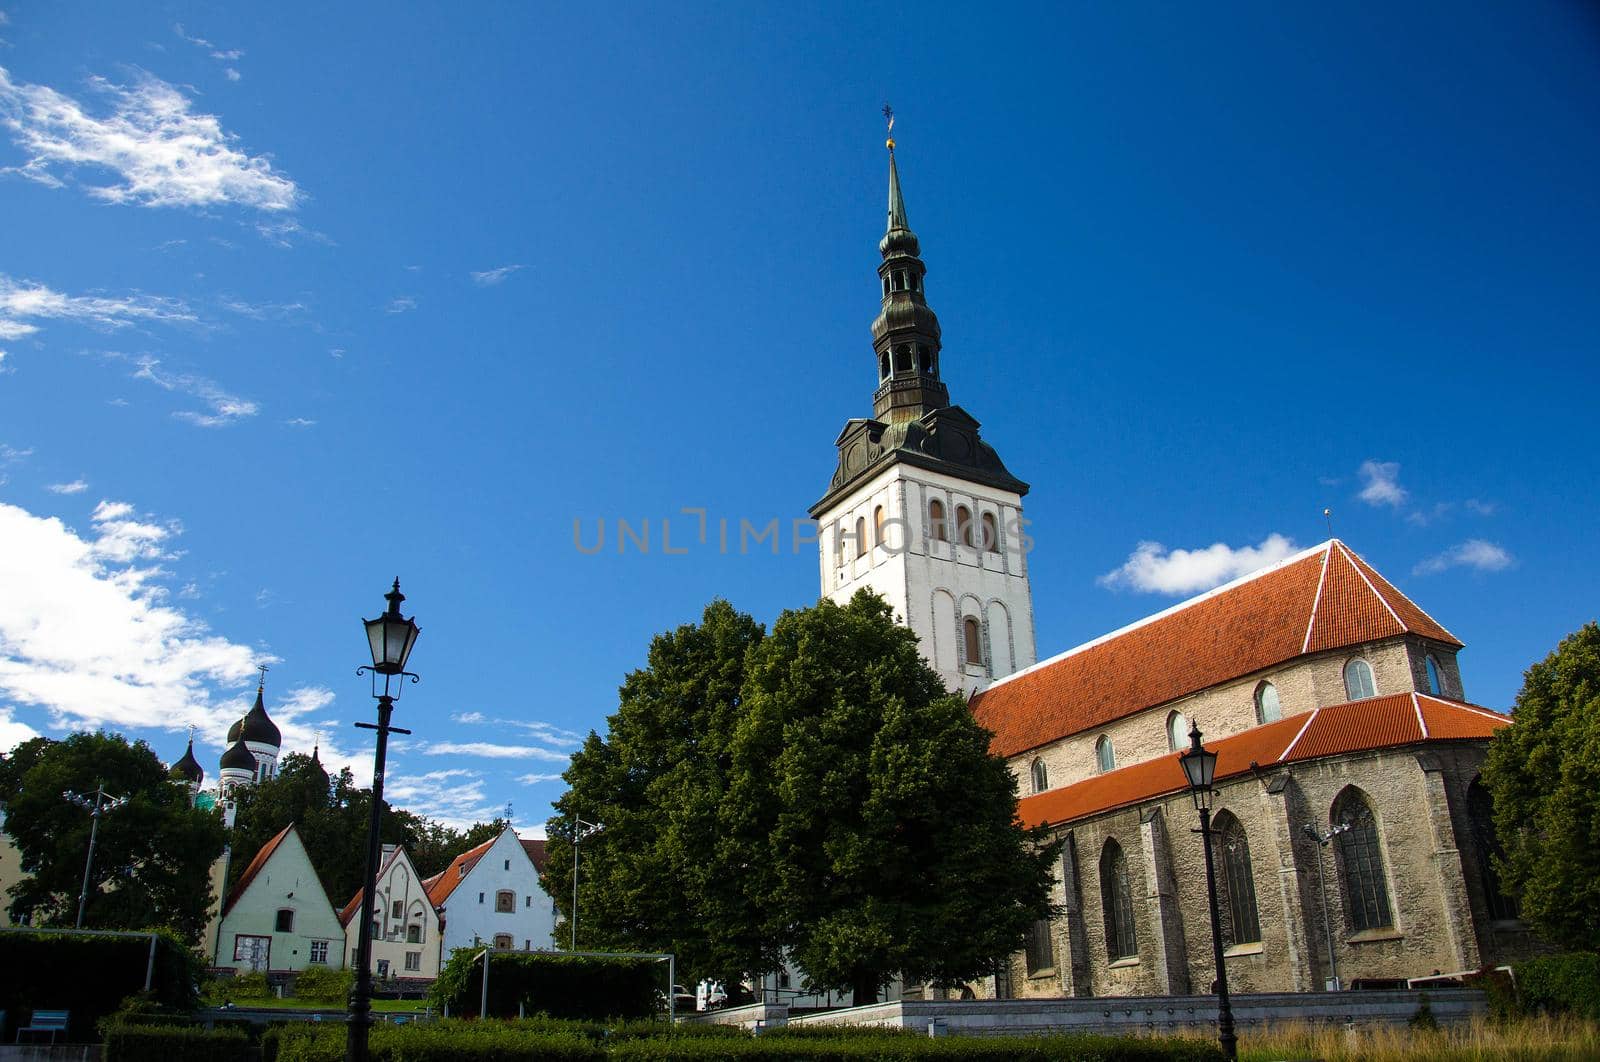 St. Nicholas Church and Museum in Old Town of Tallinn, Estonia